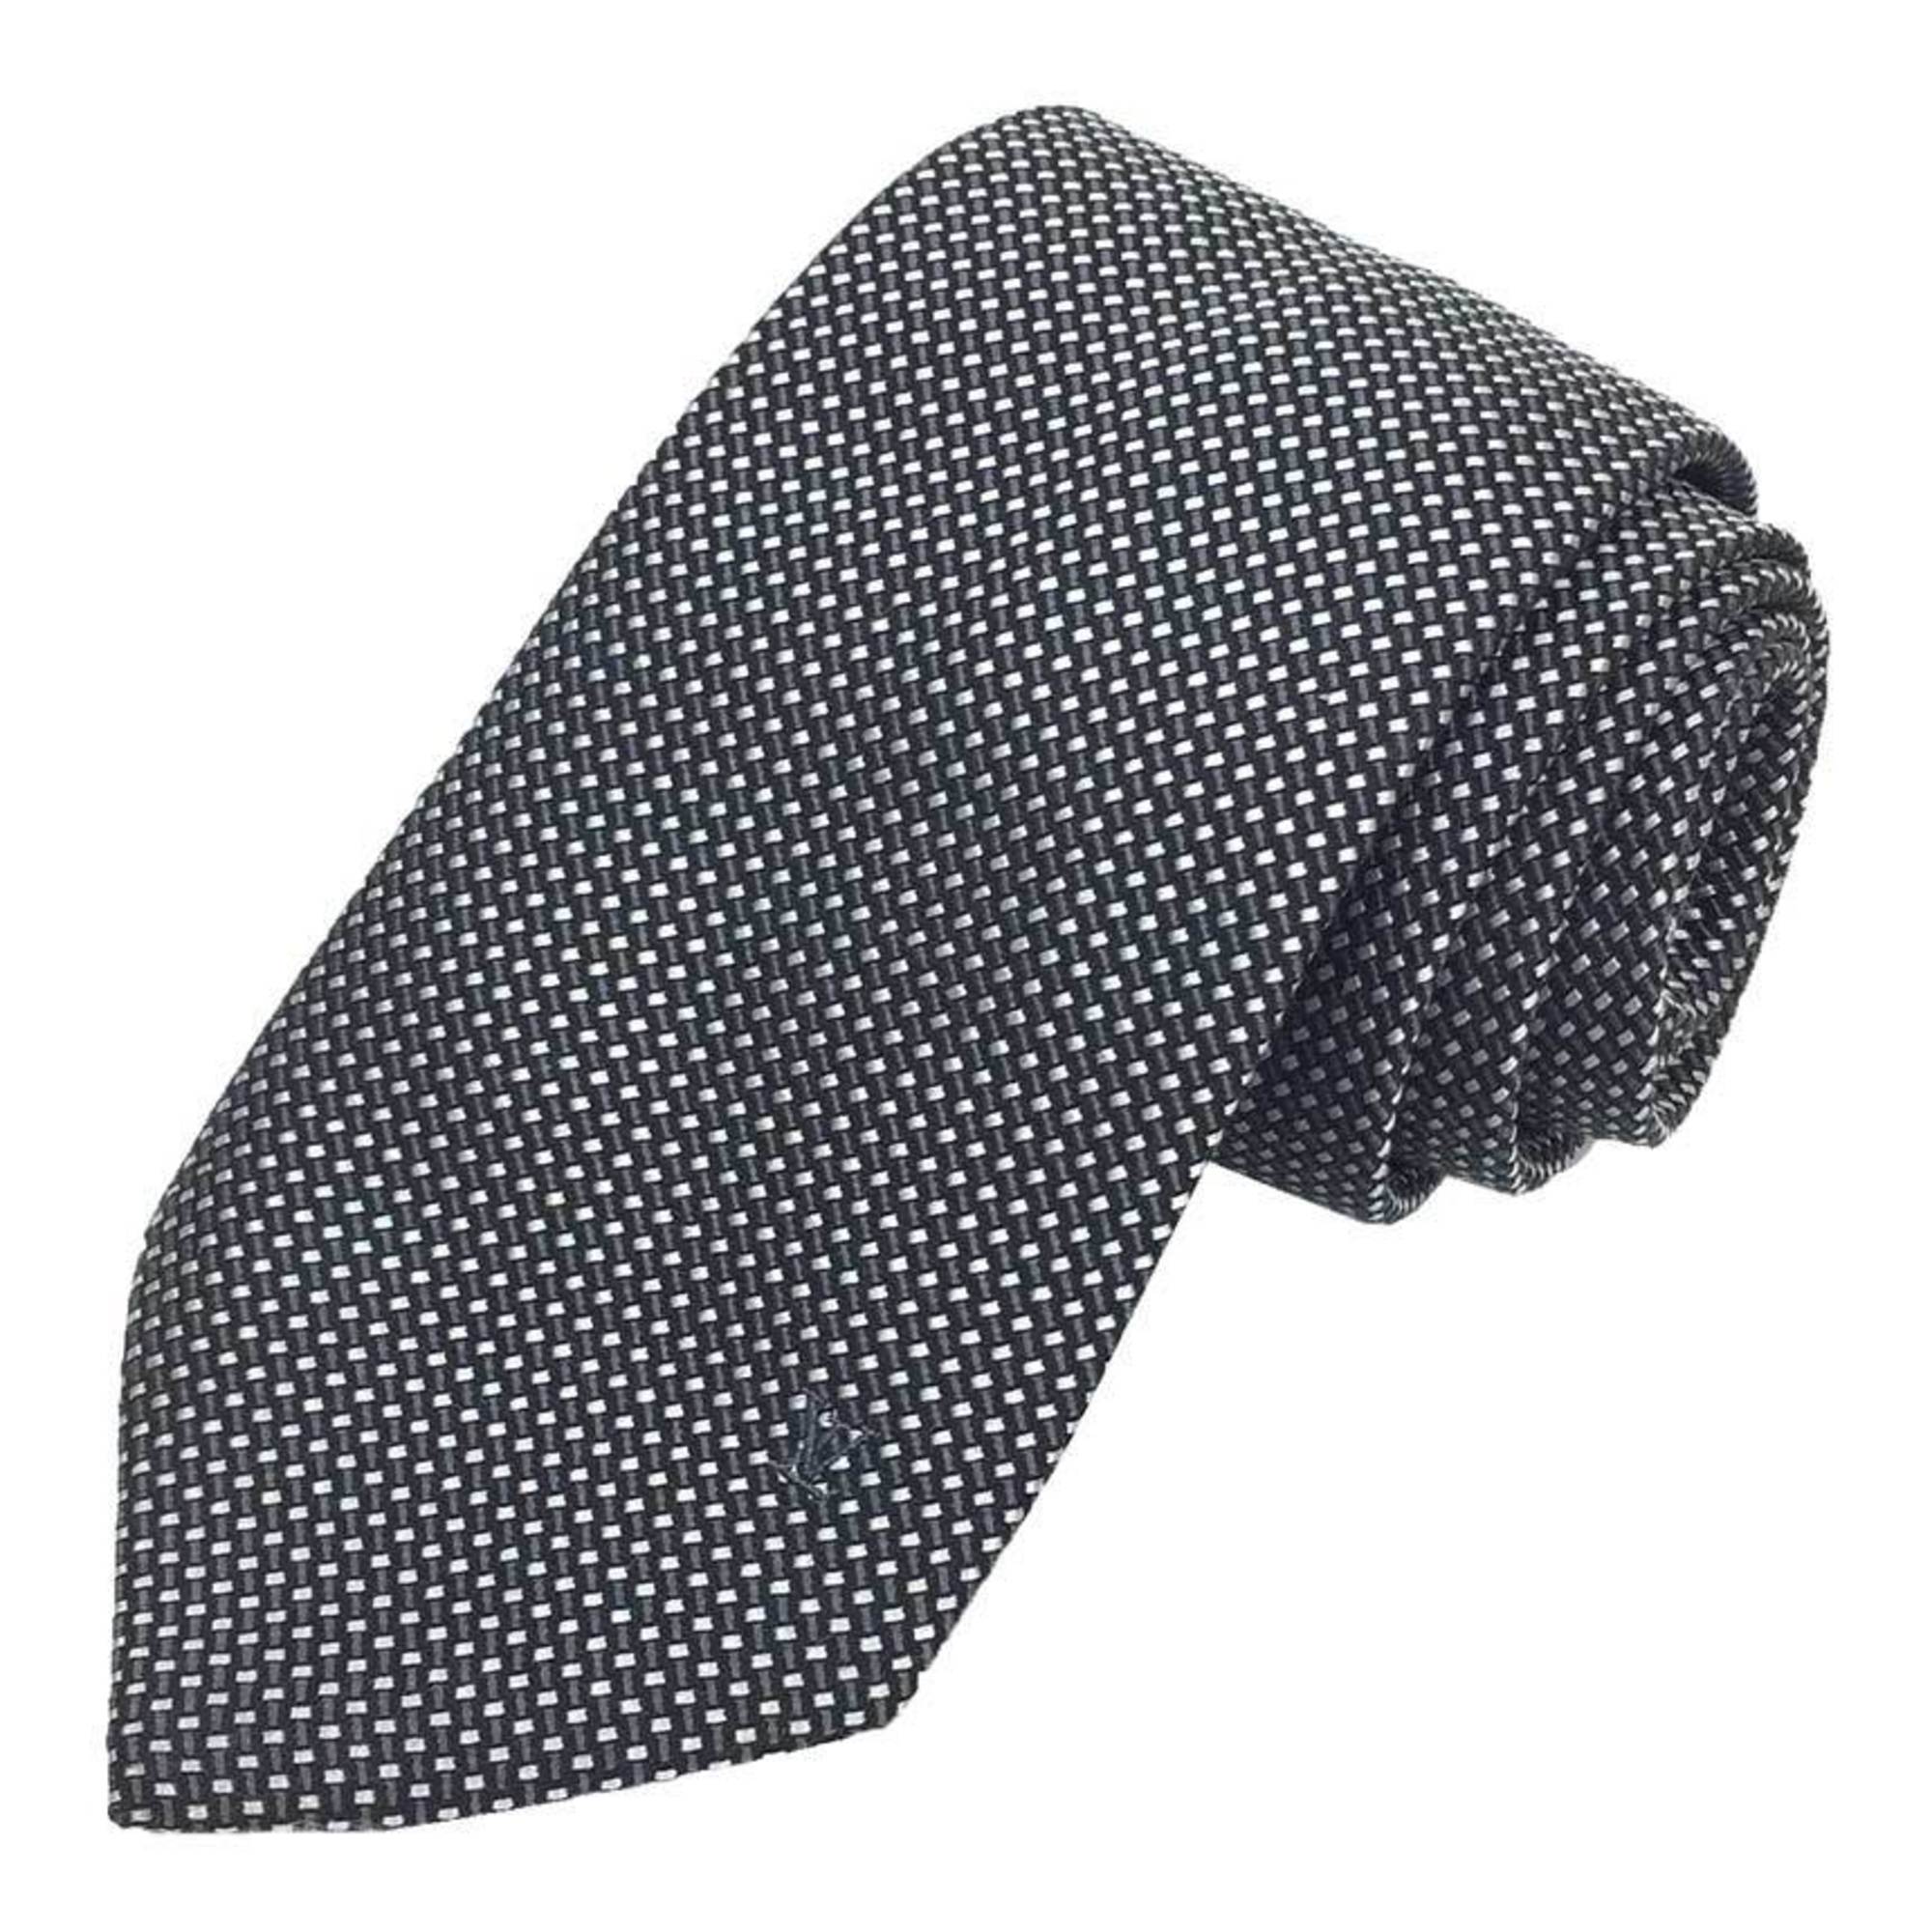 LOUIS VUITTON Louis Vuitton tie M70080 black gray 100% silk men's aq9948 10013313